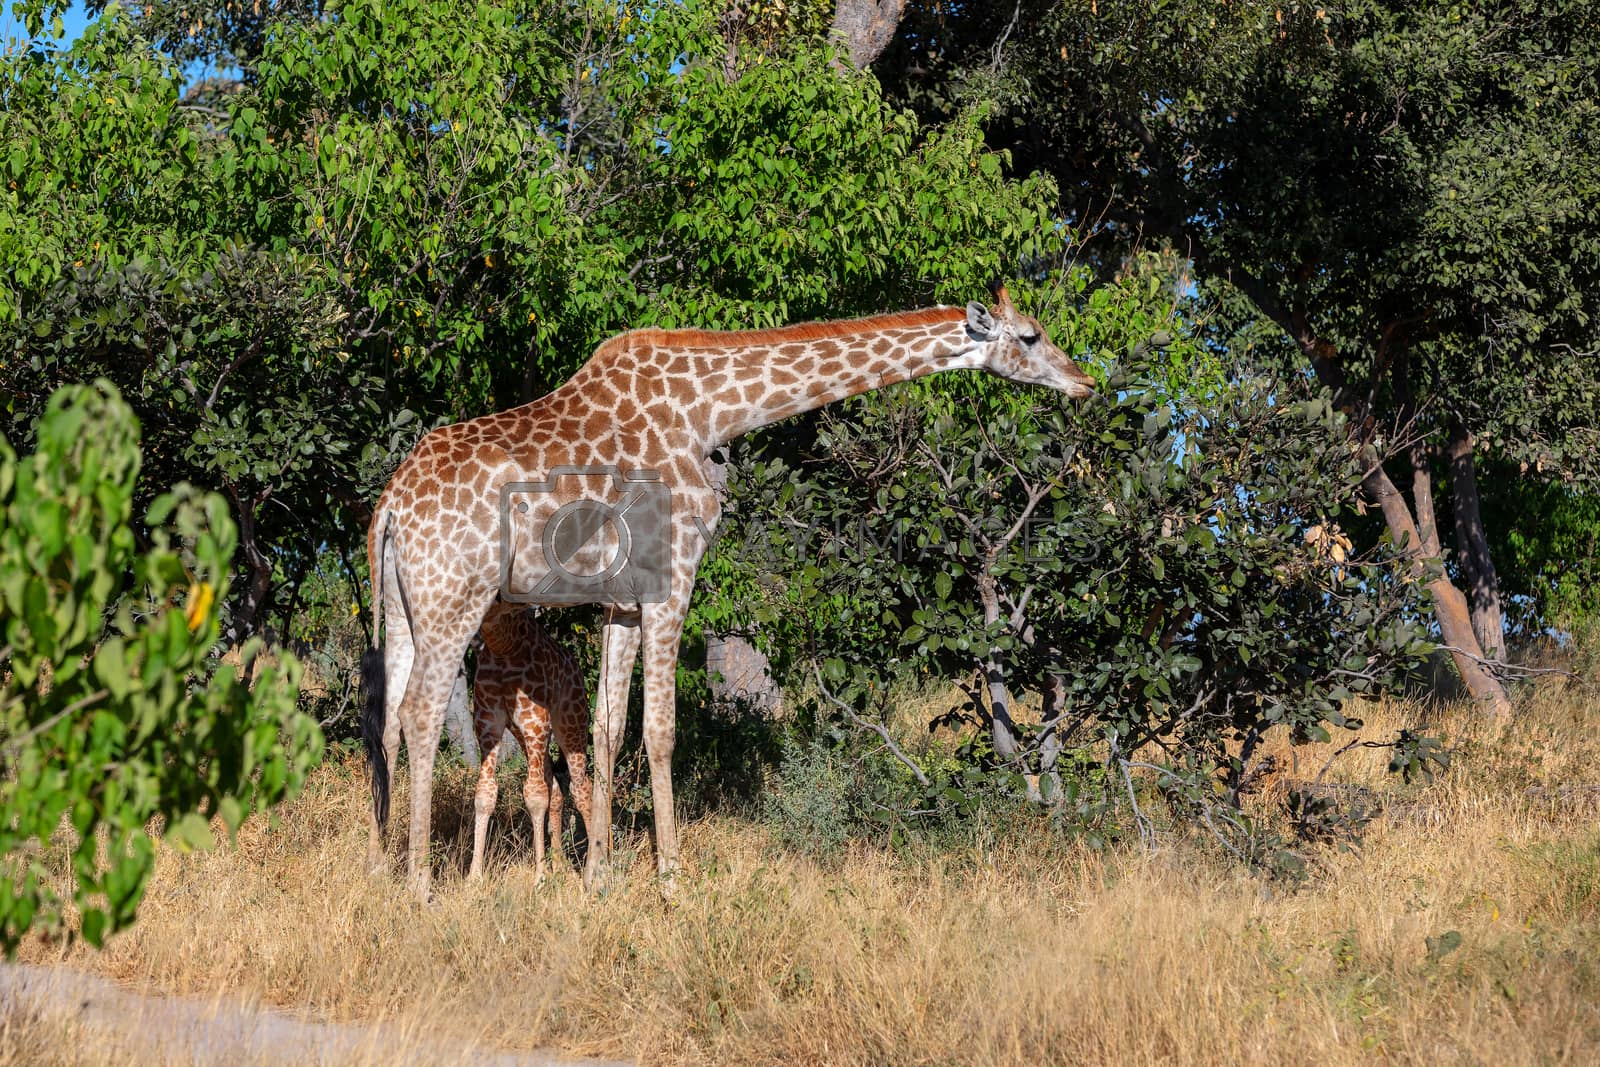 Royalty free image of giraffe with calf, Africa wildlife safari by artush